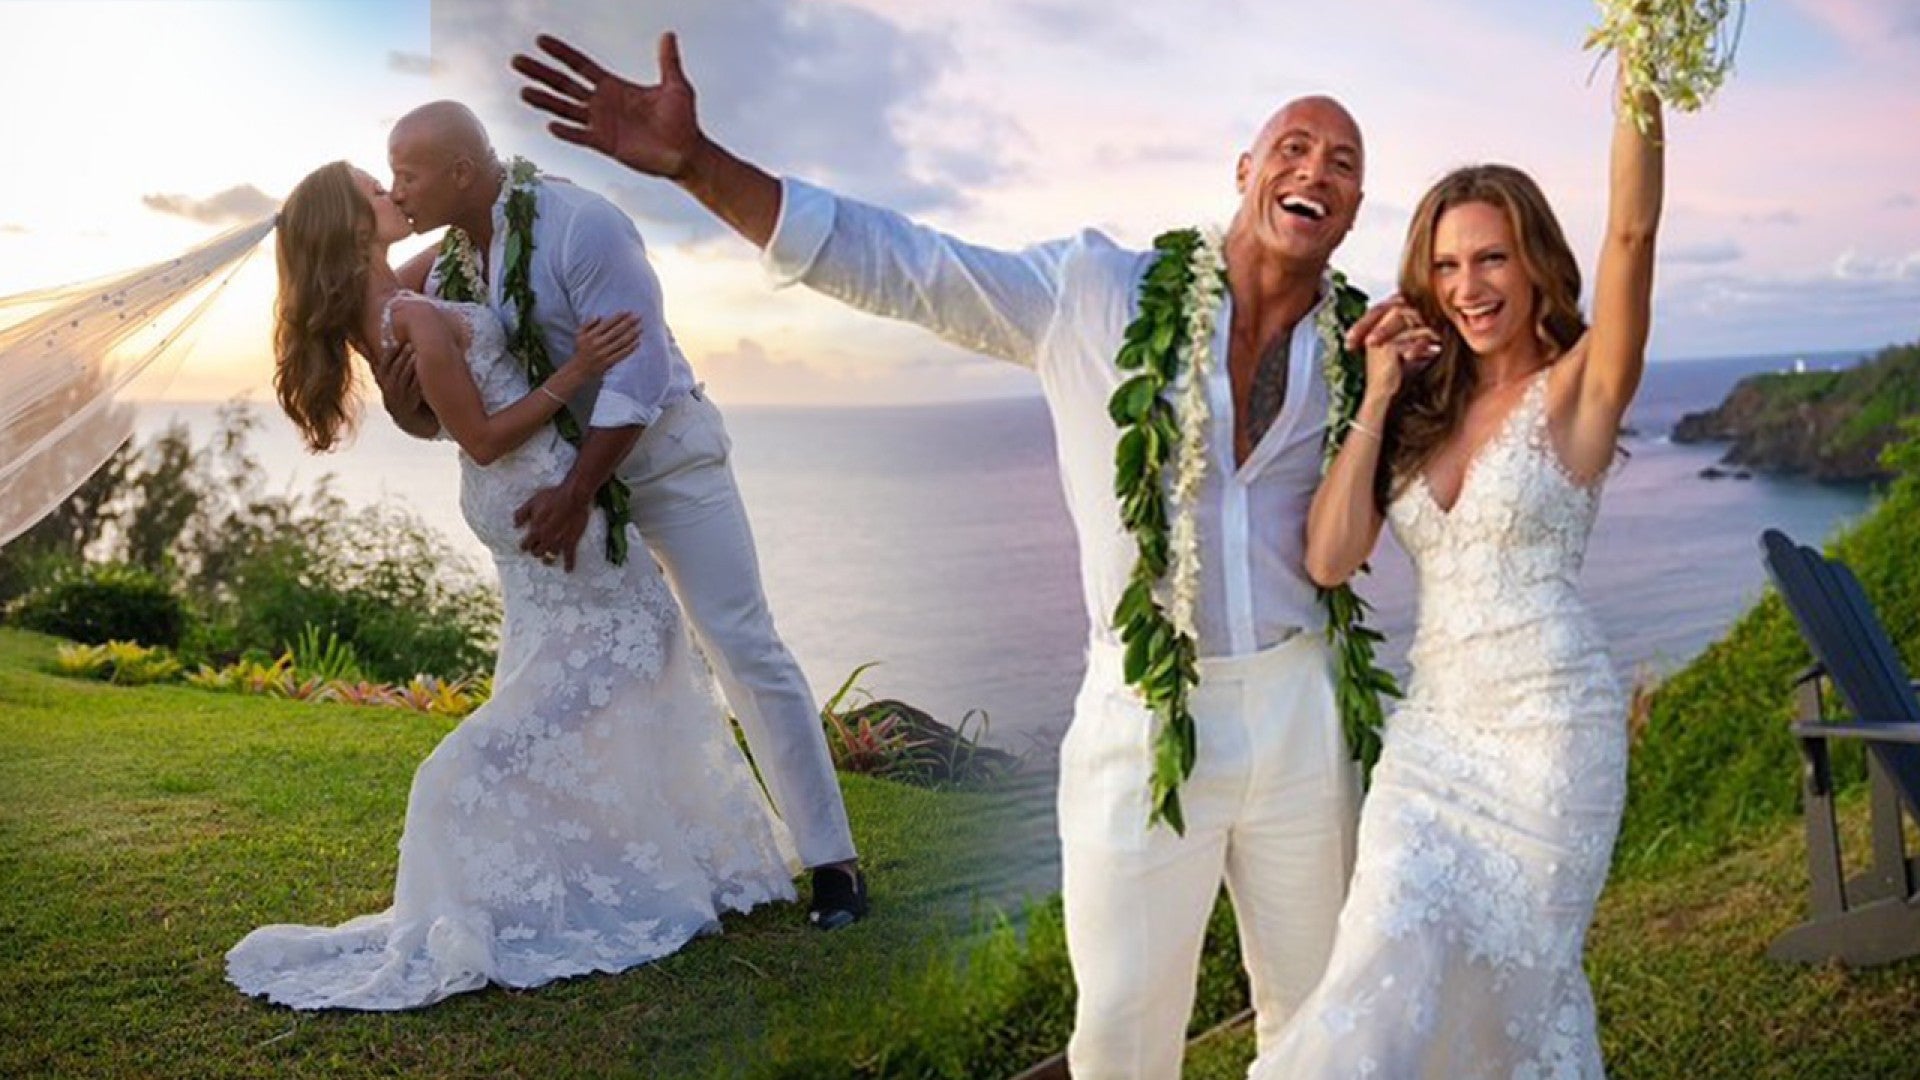 Dwayne Johnson Marries Lauren Hashian In Romantic Hawaiian Wedding